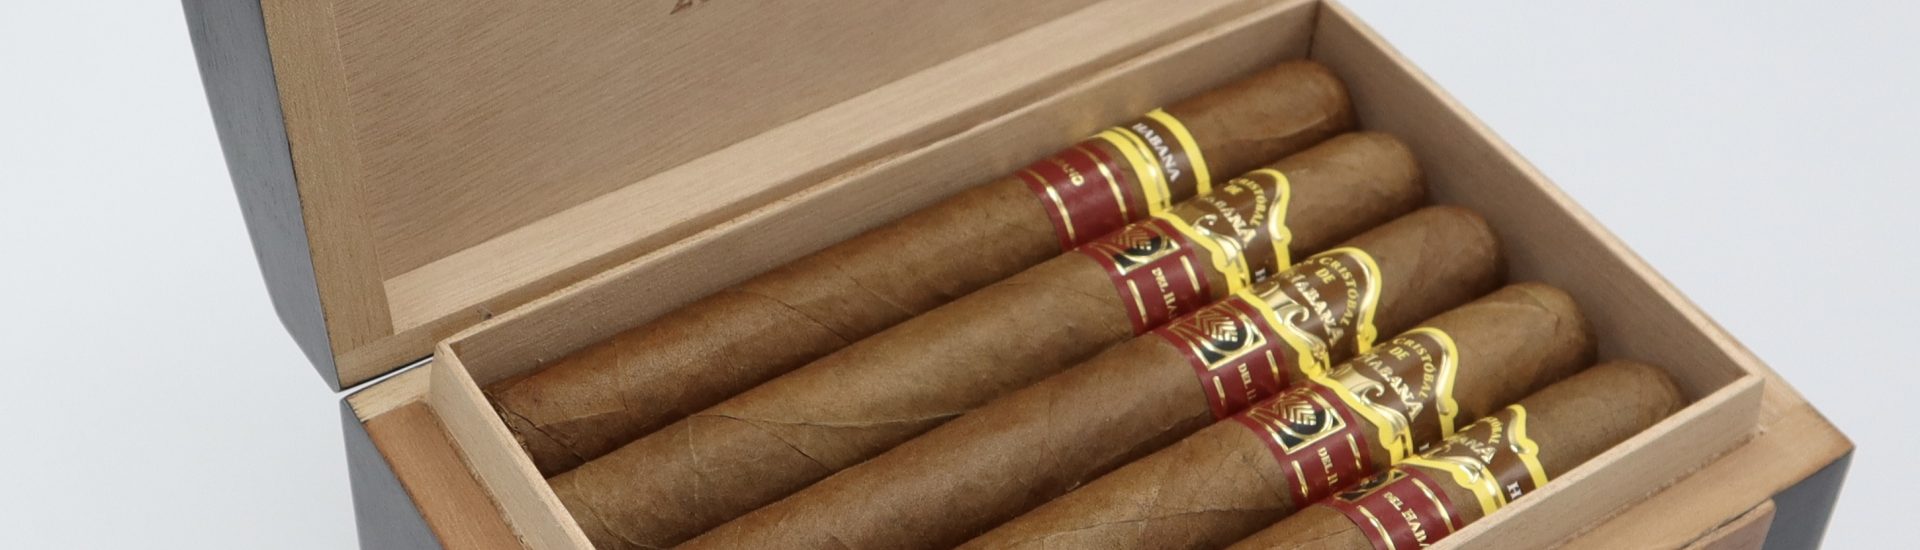 NEW - San Cristobal 20 Aniversario Treasure Chest Cigar